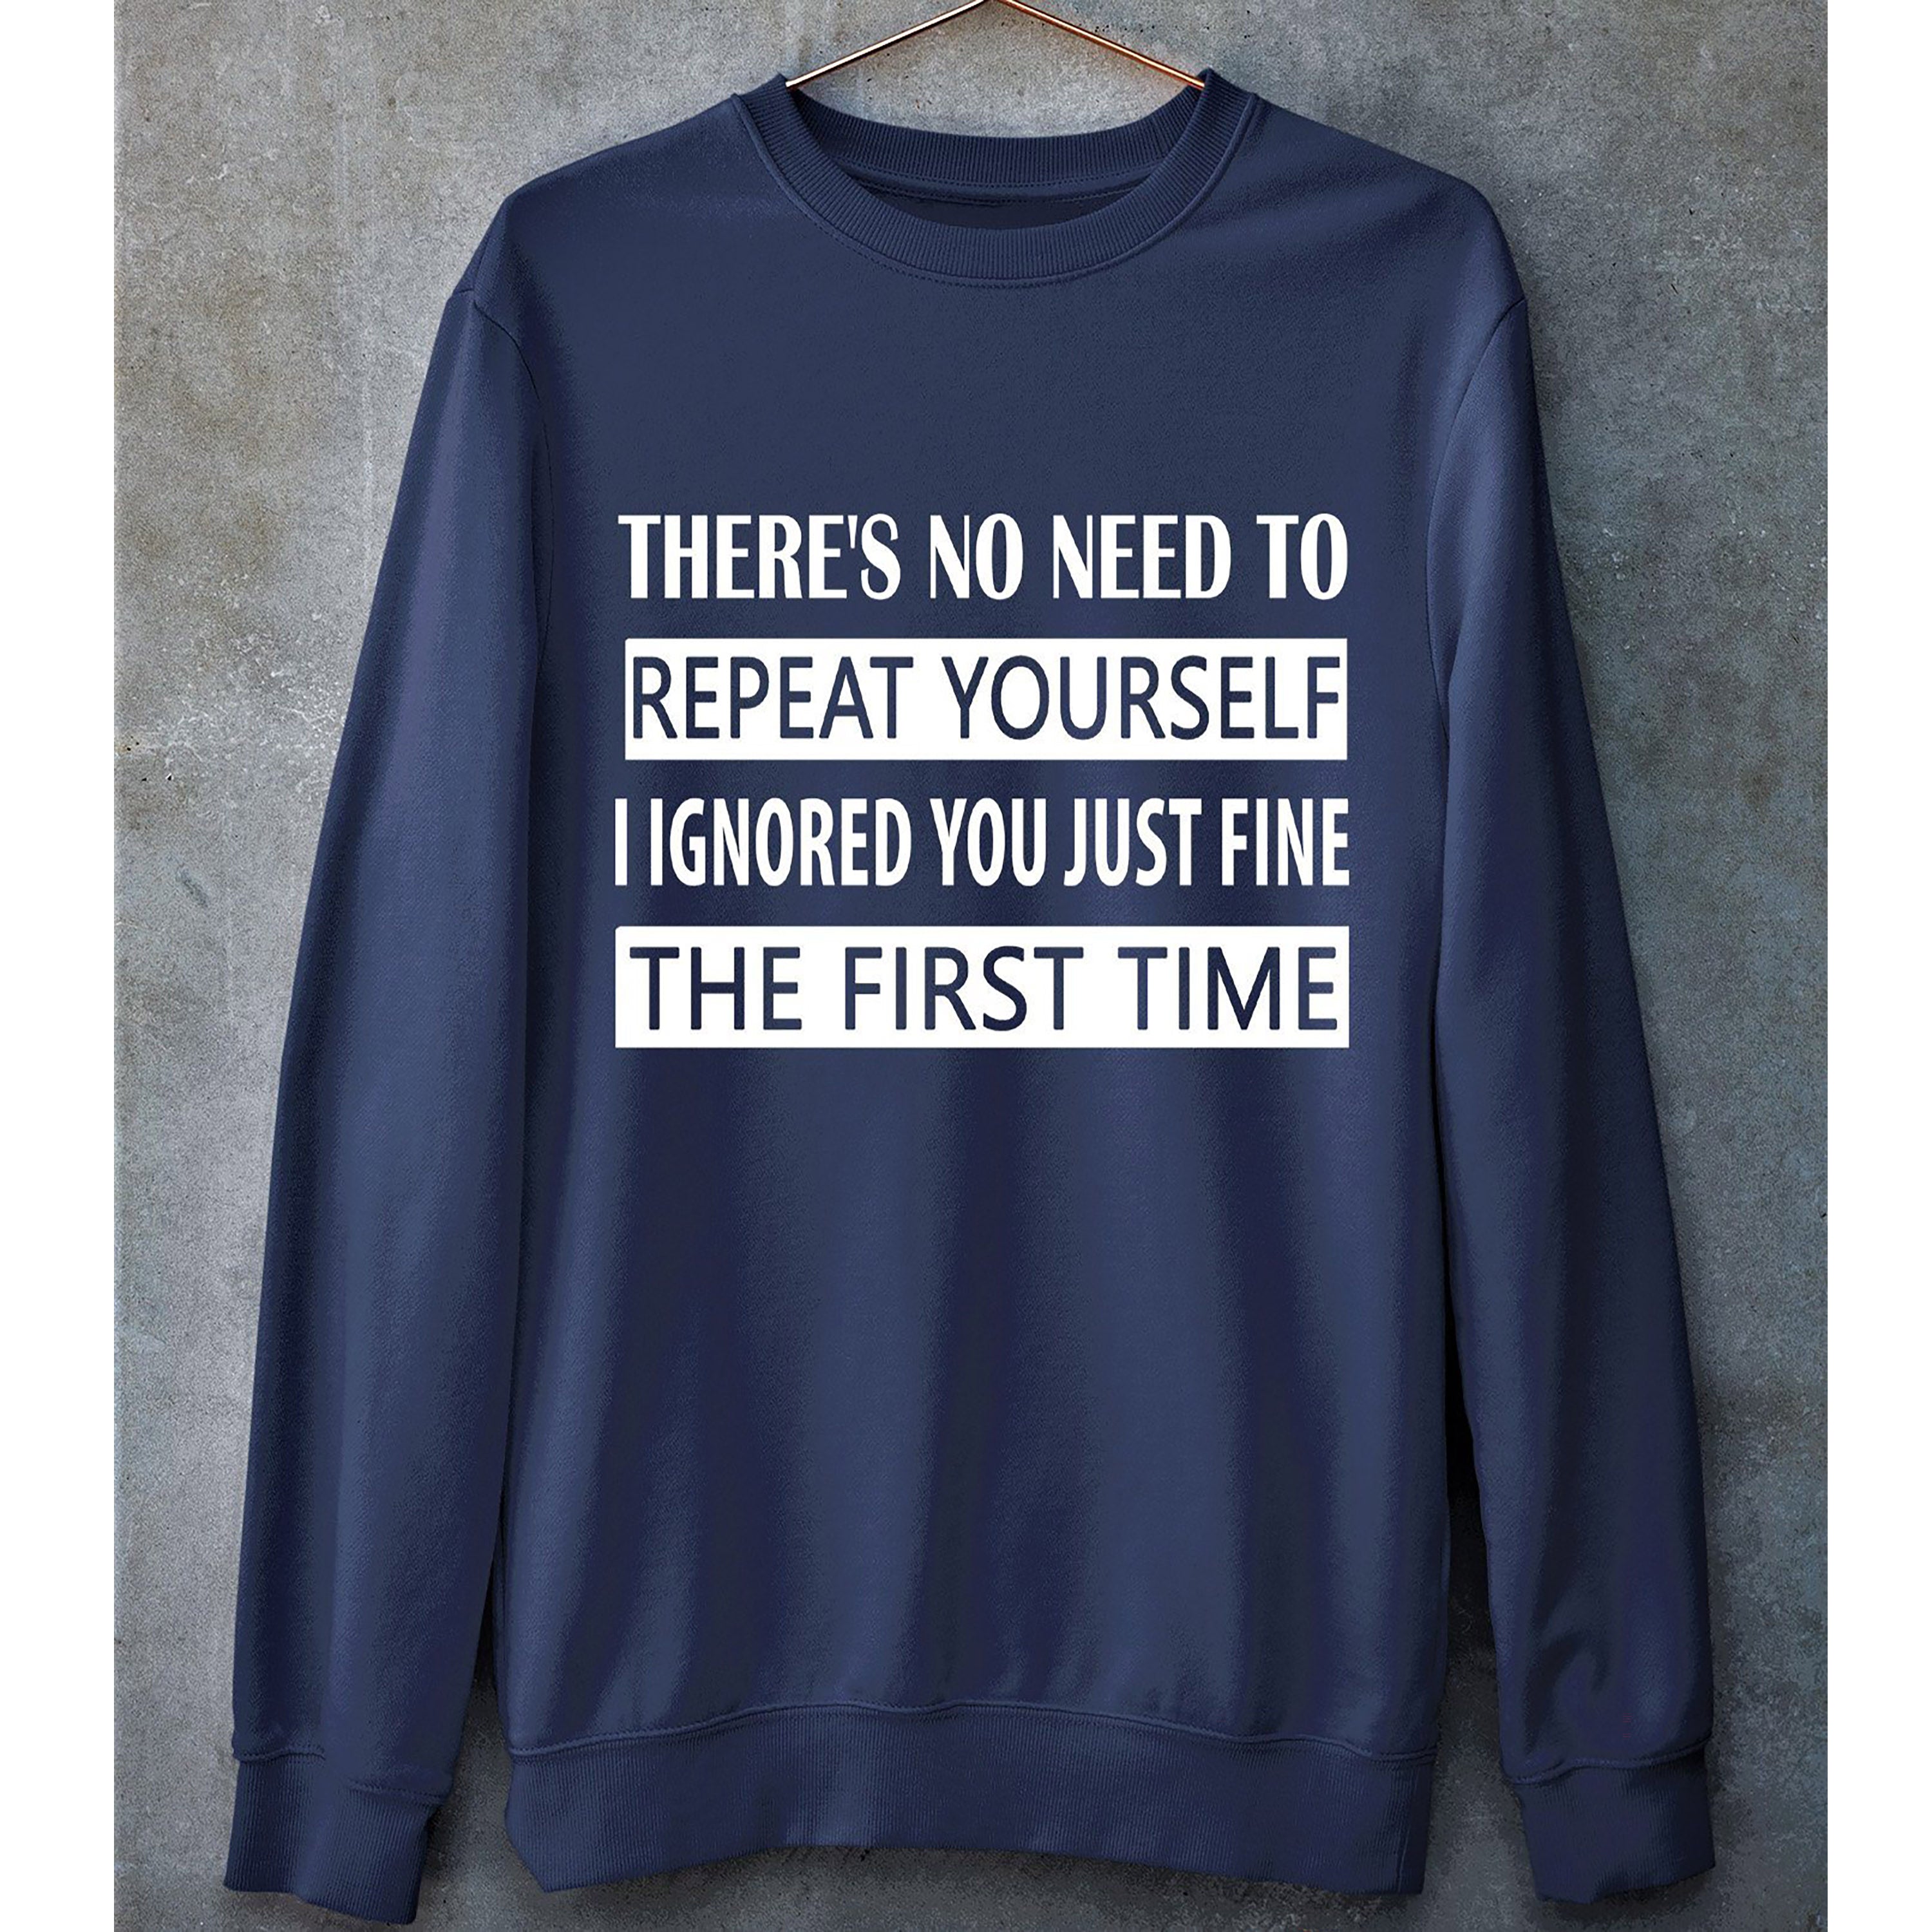 "NO NEED TO REPEAT YOURSELF" - Hoodie & Sweatshirt